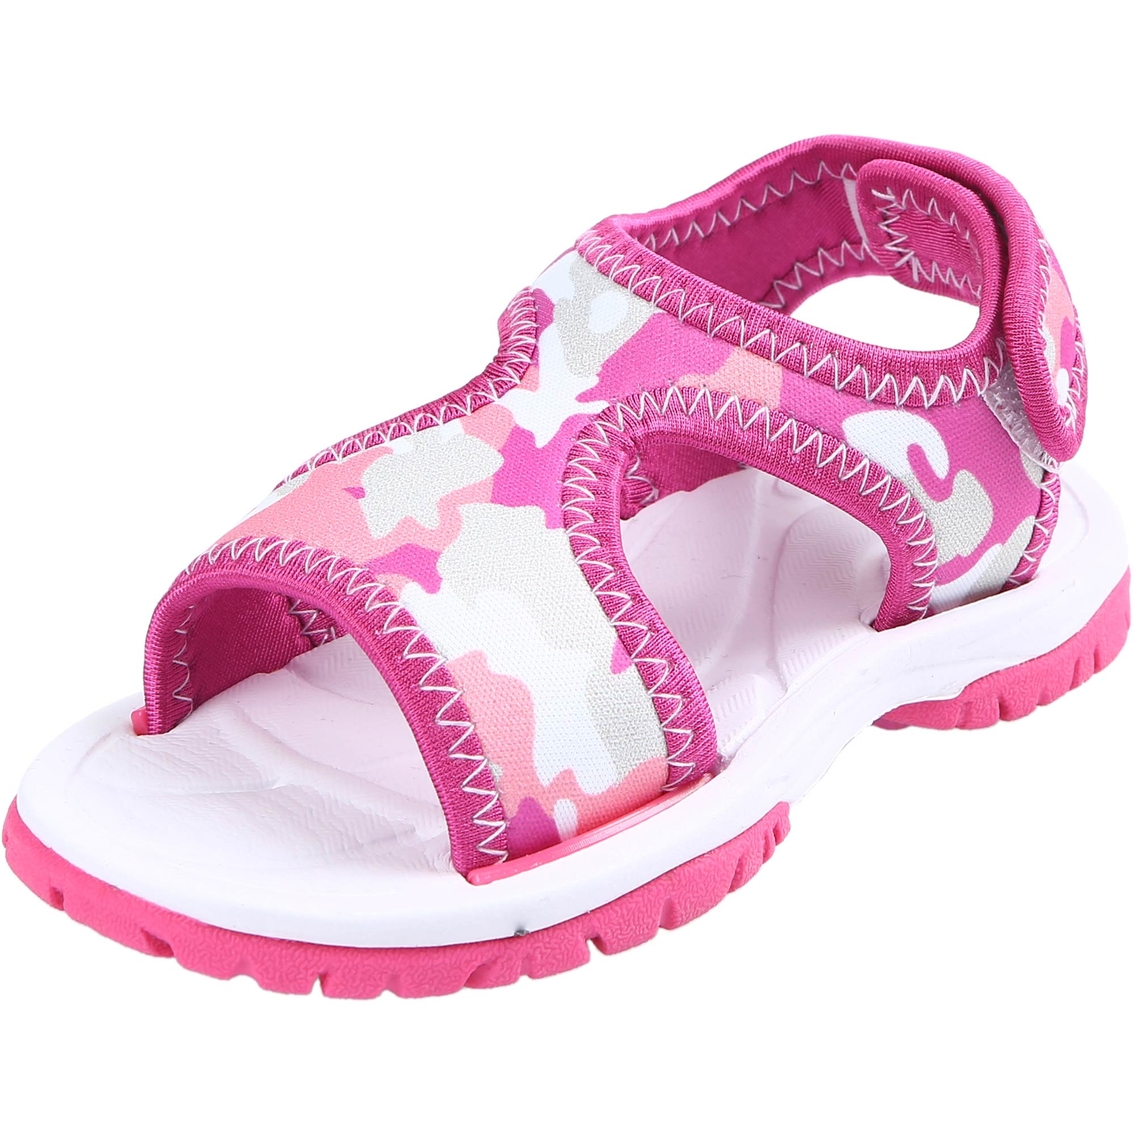 Triple T Toddler Girls Northside Minnow Shoes | Sandals | Shoes | Shop ...